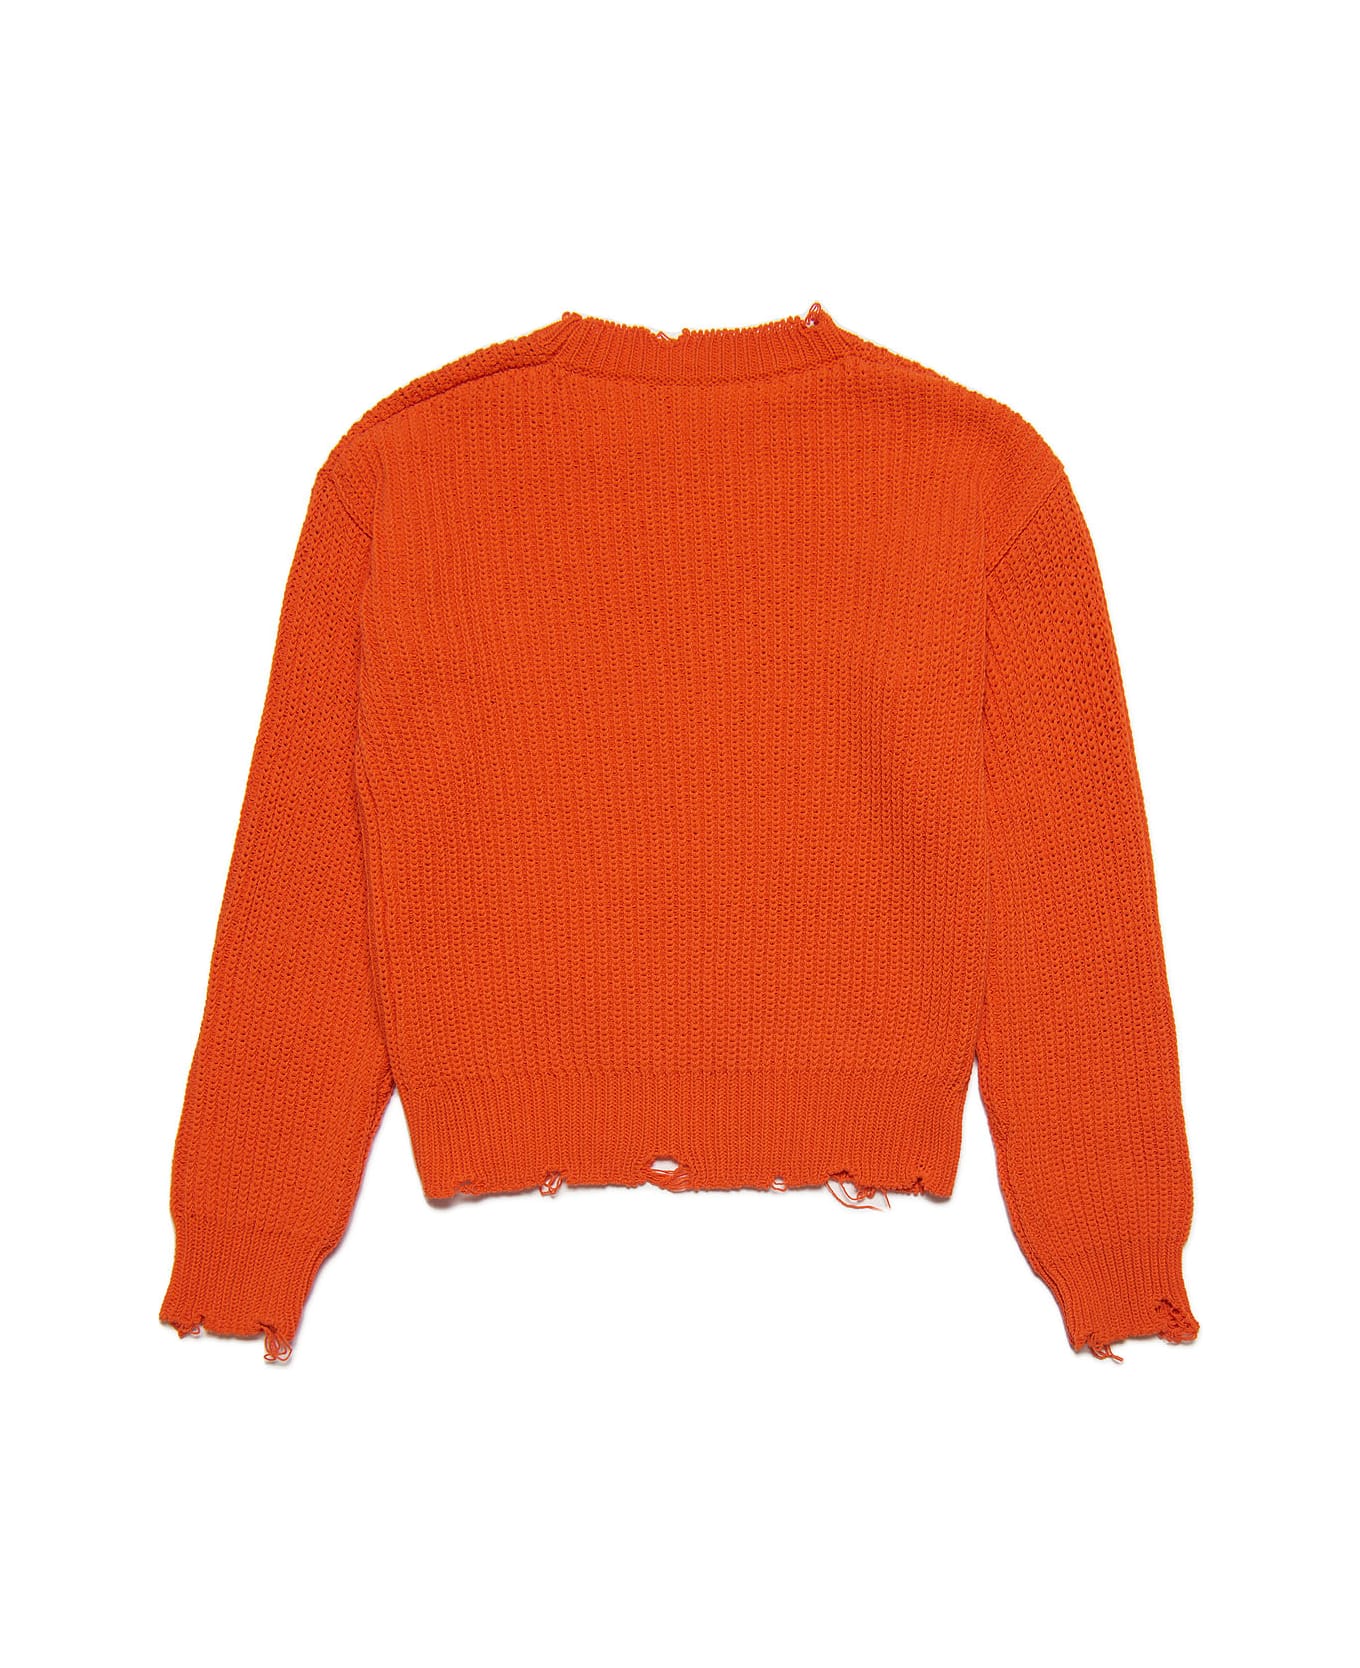 Dsquared2 Orange Sweater Boy - Arancione